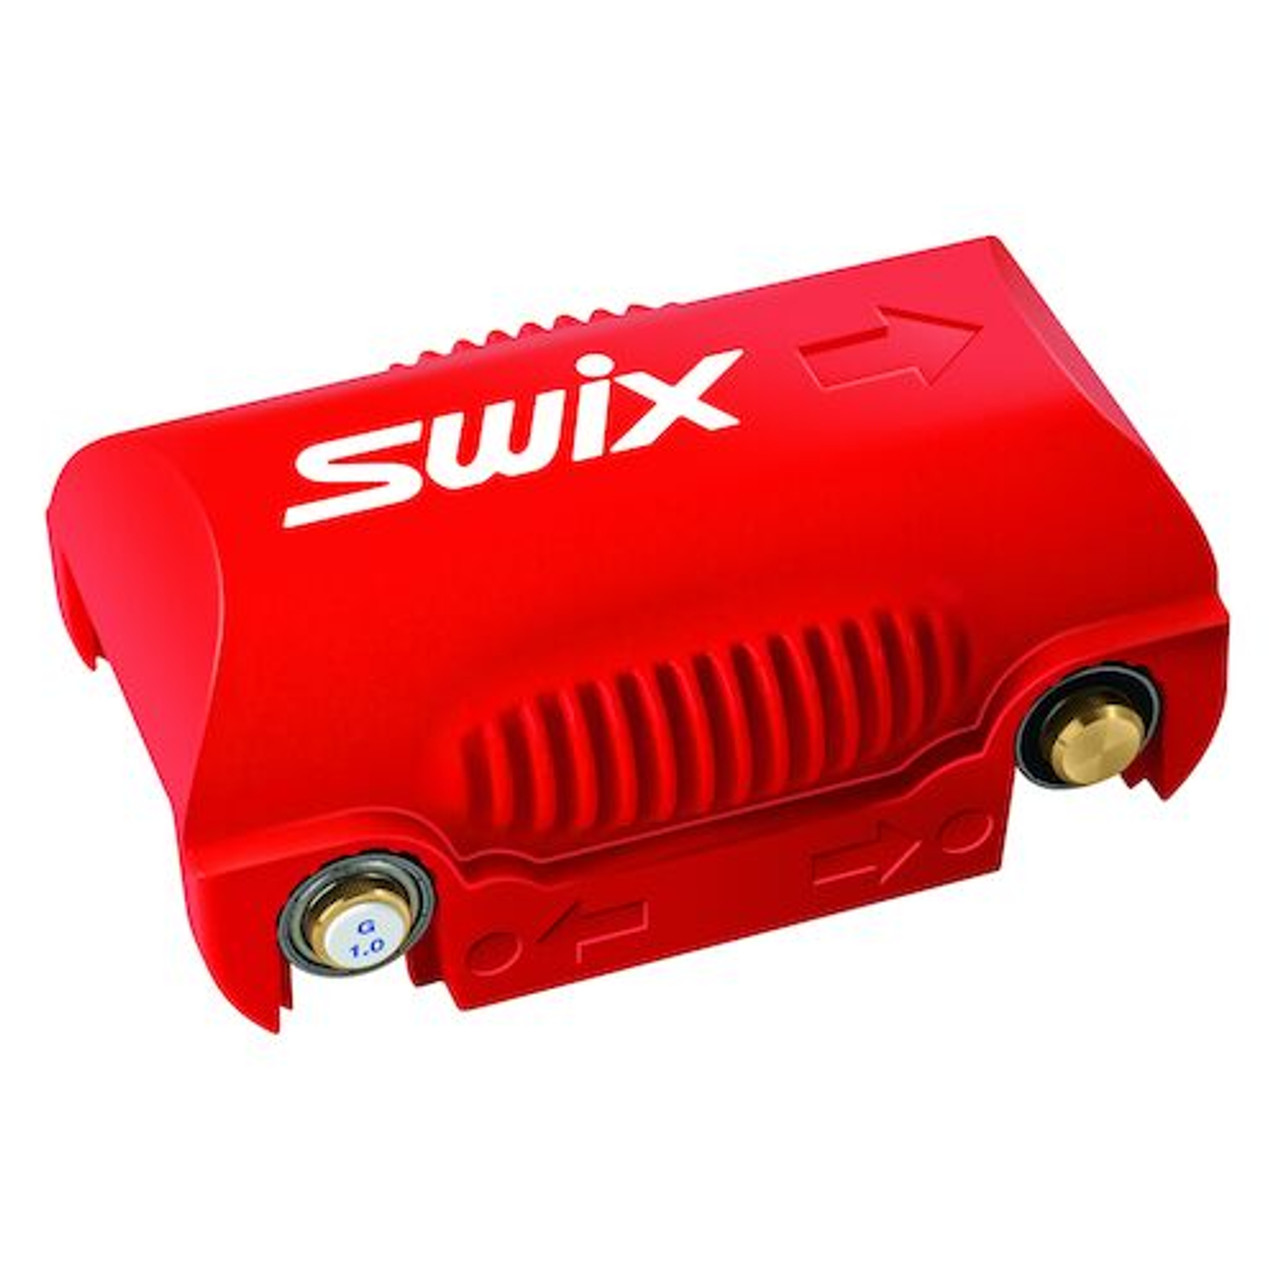 Swix T0424 structure roller tool